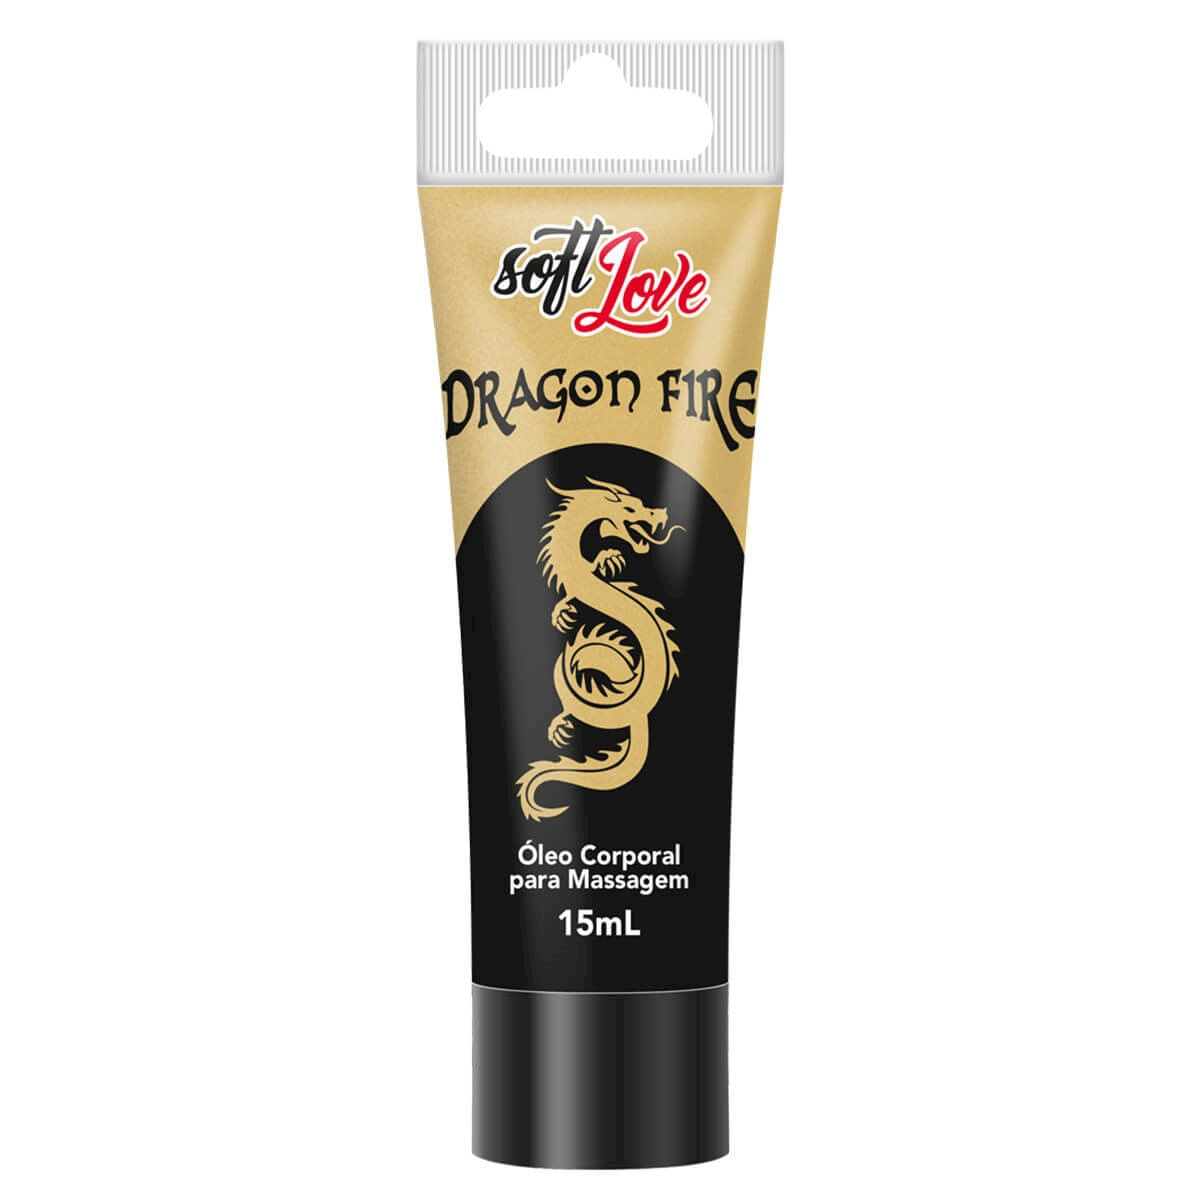 Dragon Fire Óleo Corporal para Massagem 15ml Soft Love